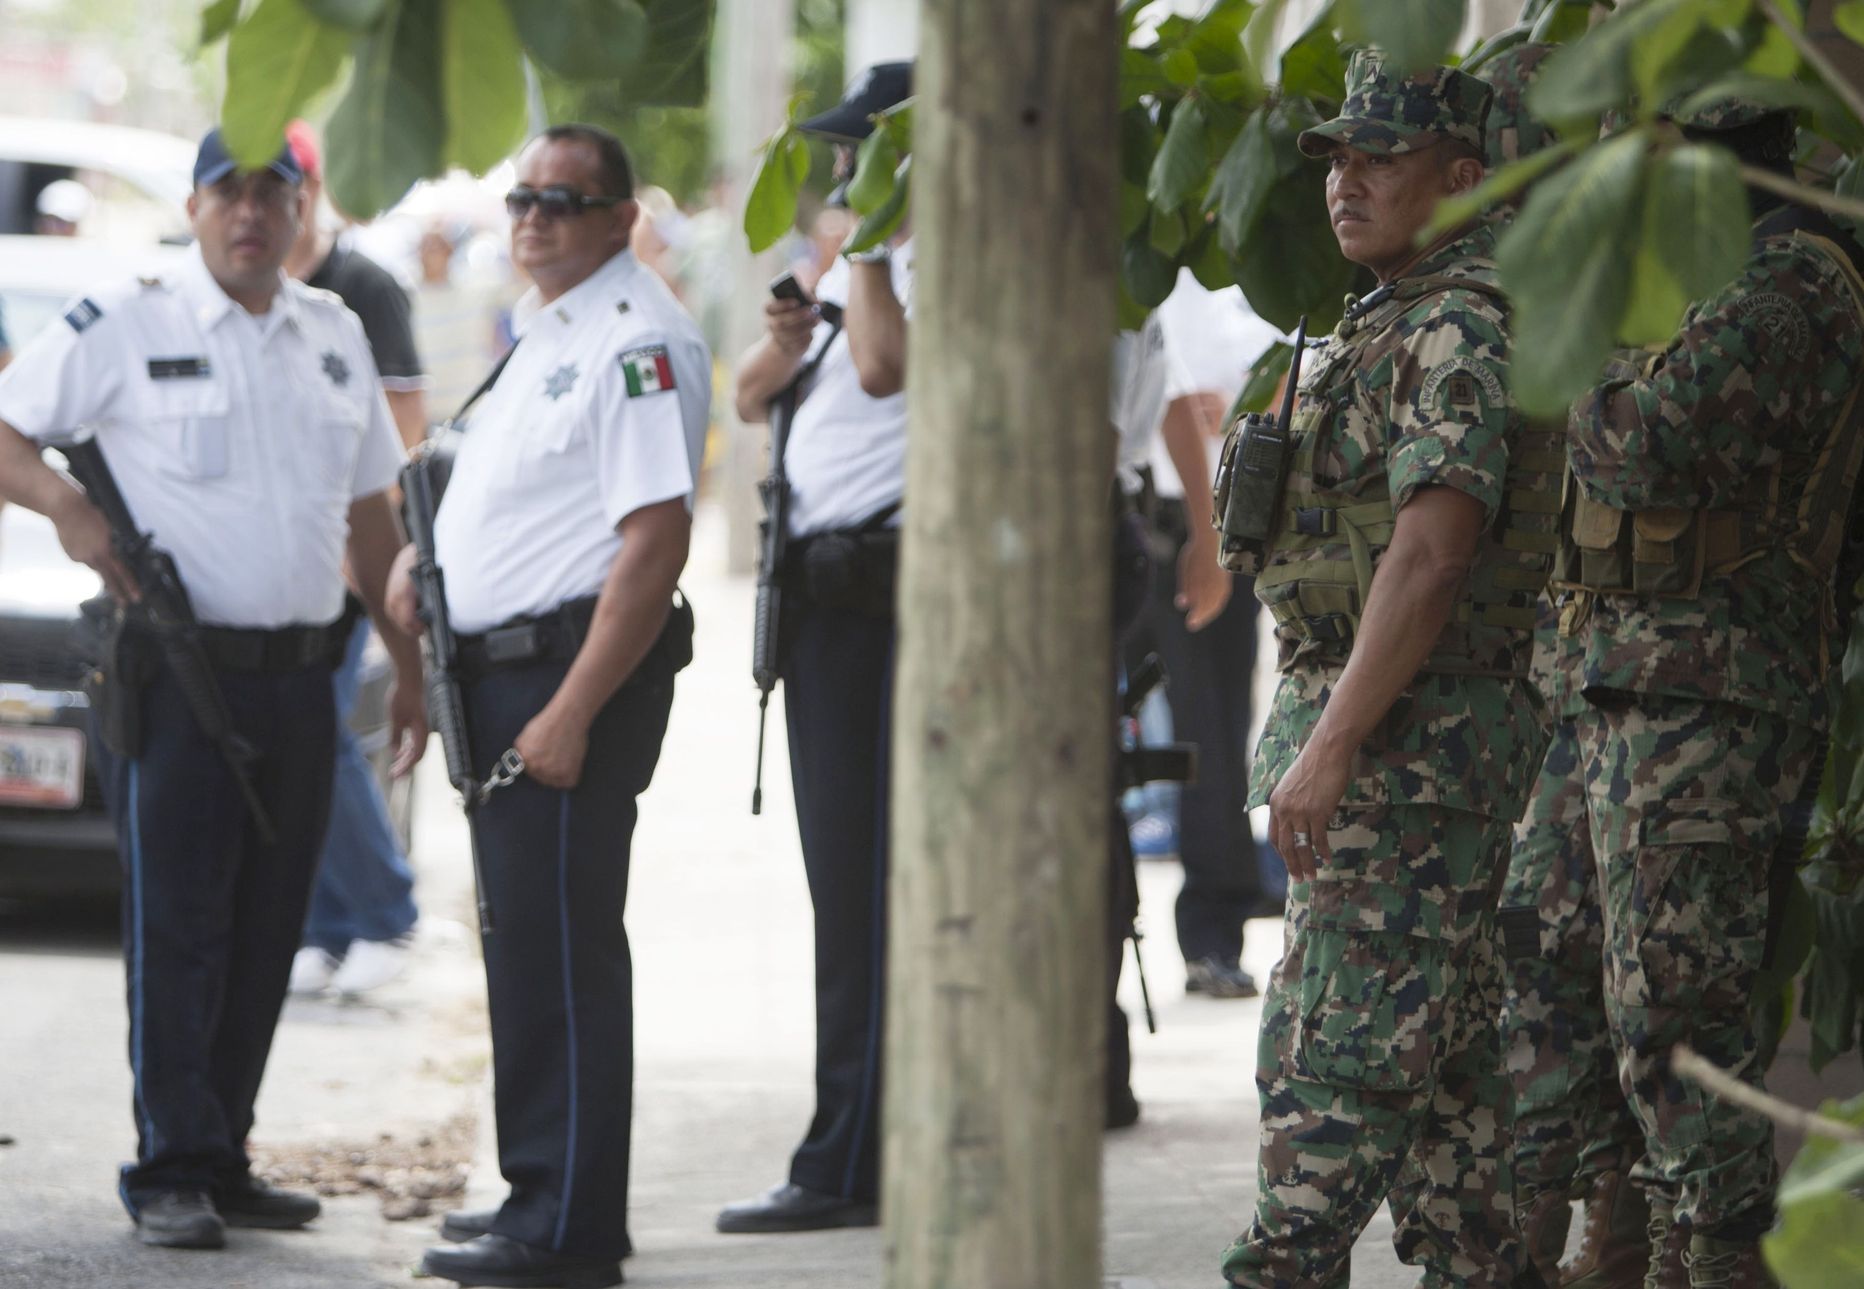 Politsei ja sõdurid seitsme inimese tapmispaika uurimas